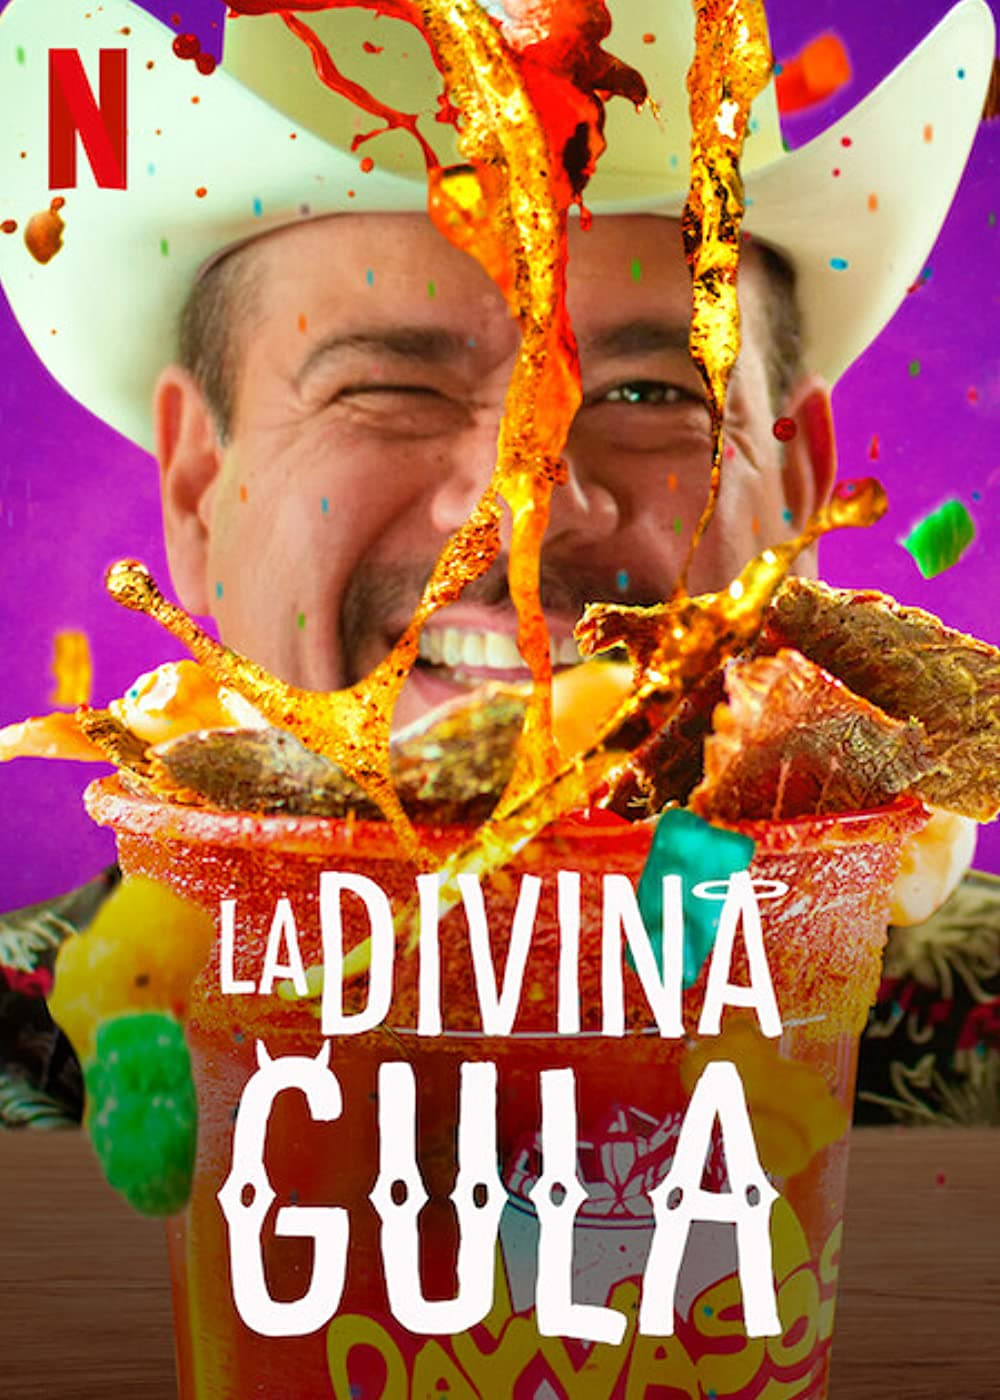 La divina gula TV Shows About Food